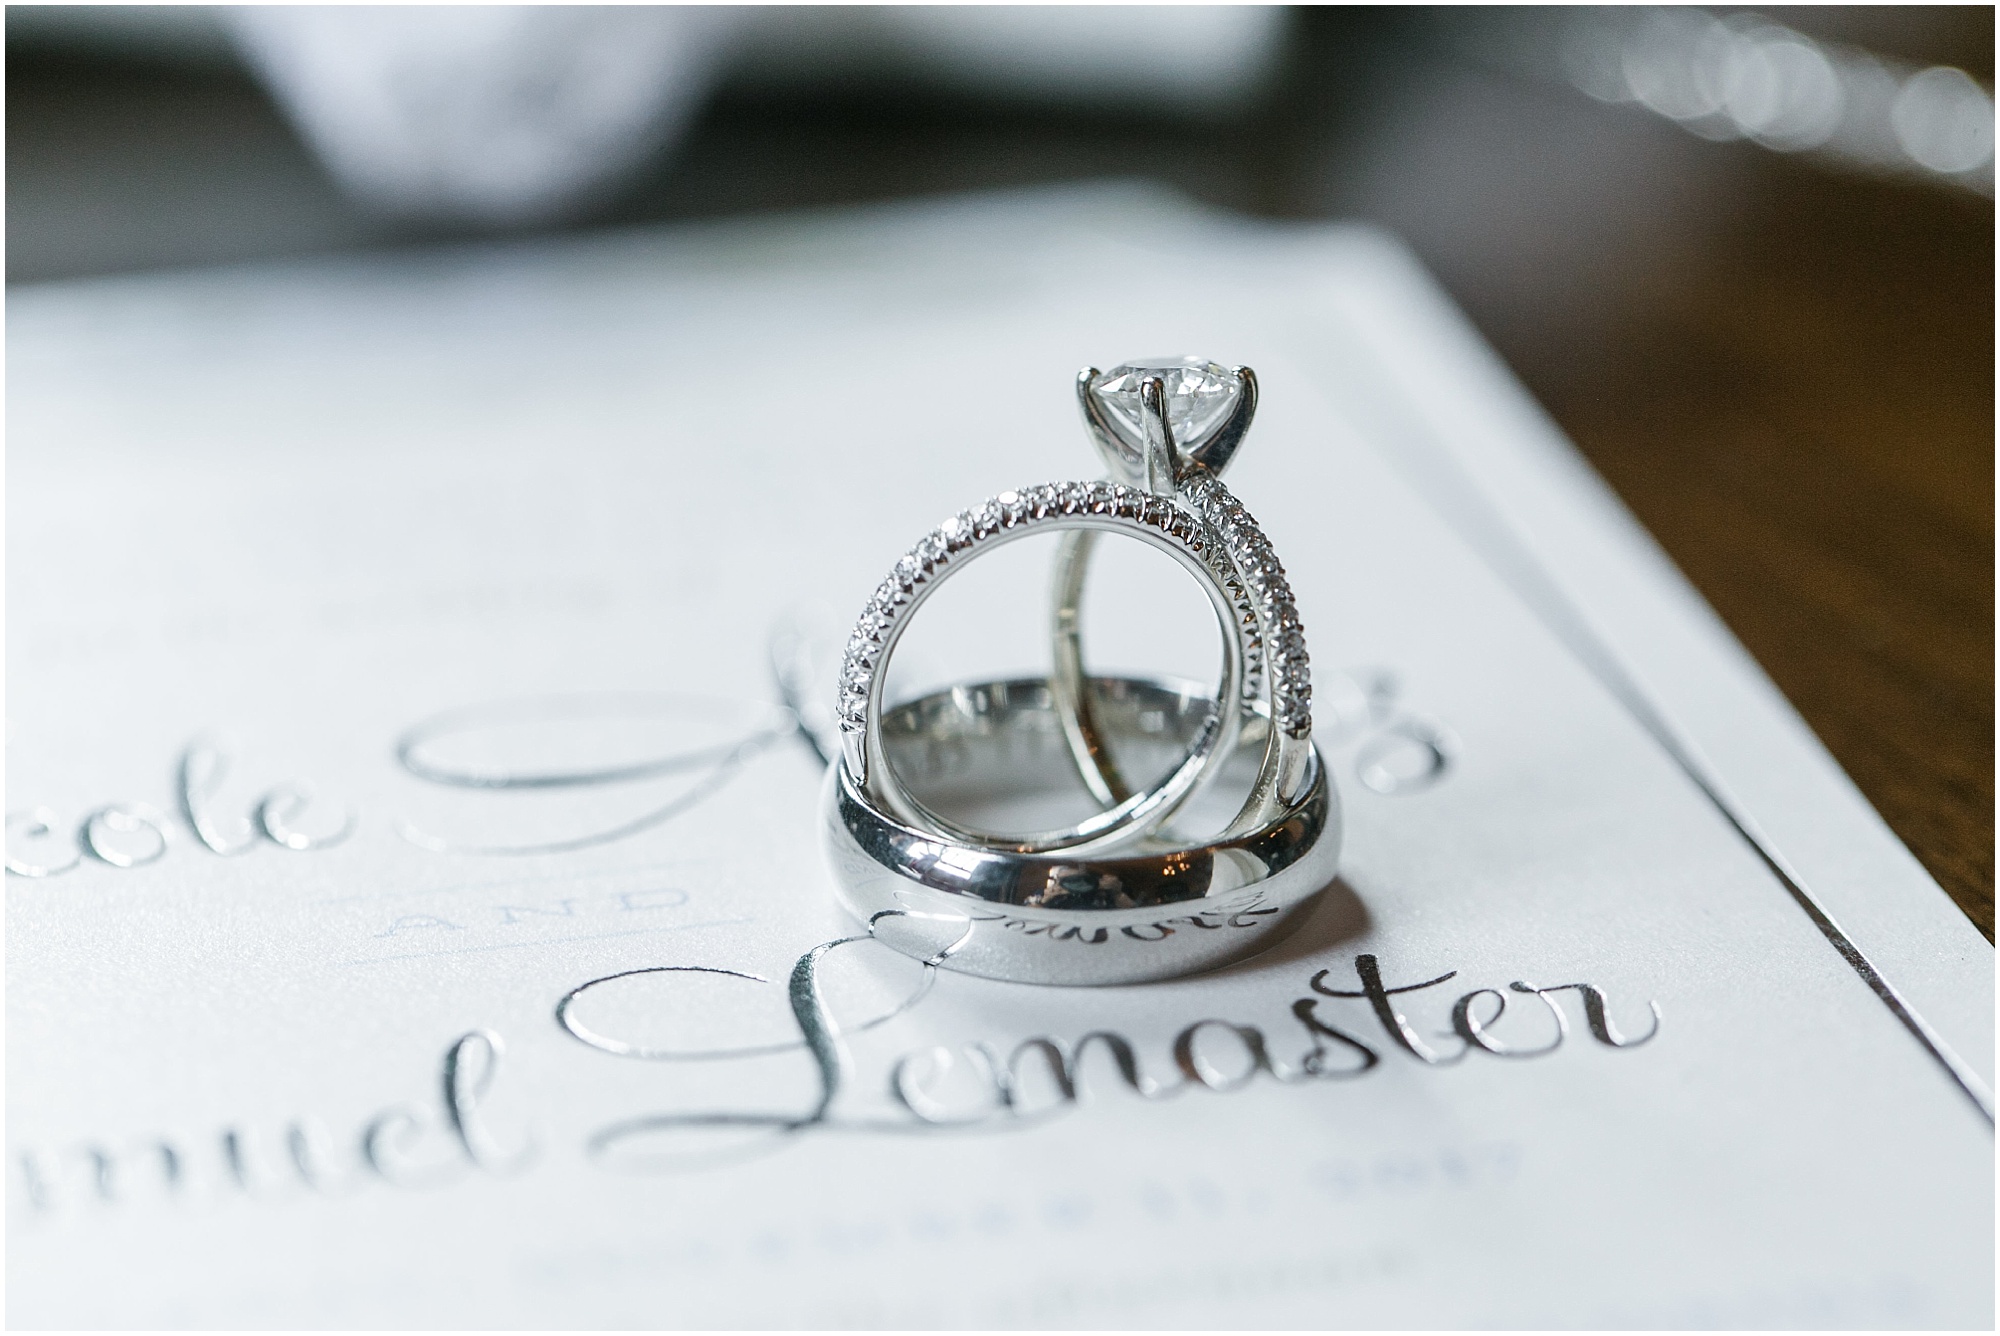 Wedding rings sitting on top of a wedding invitation.